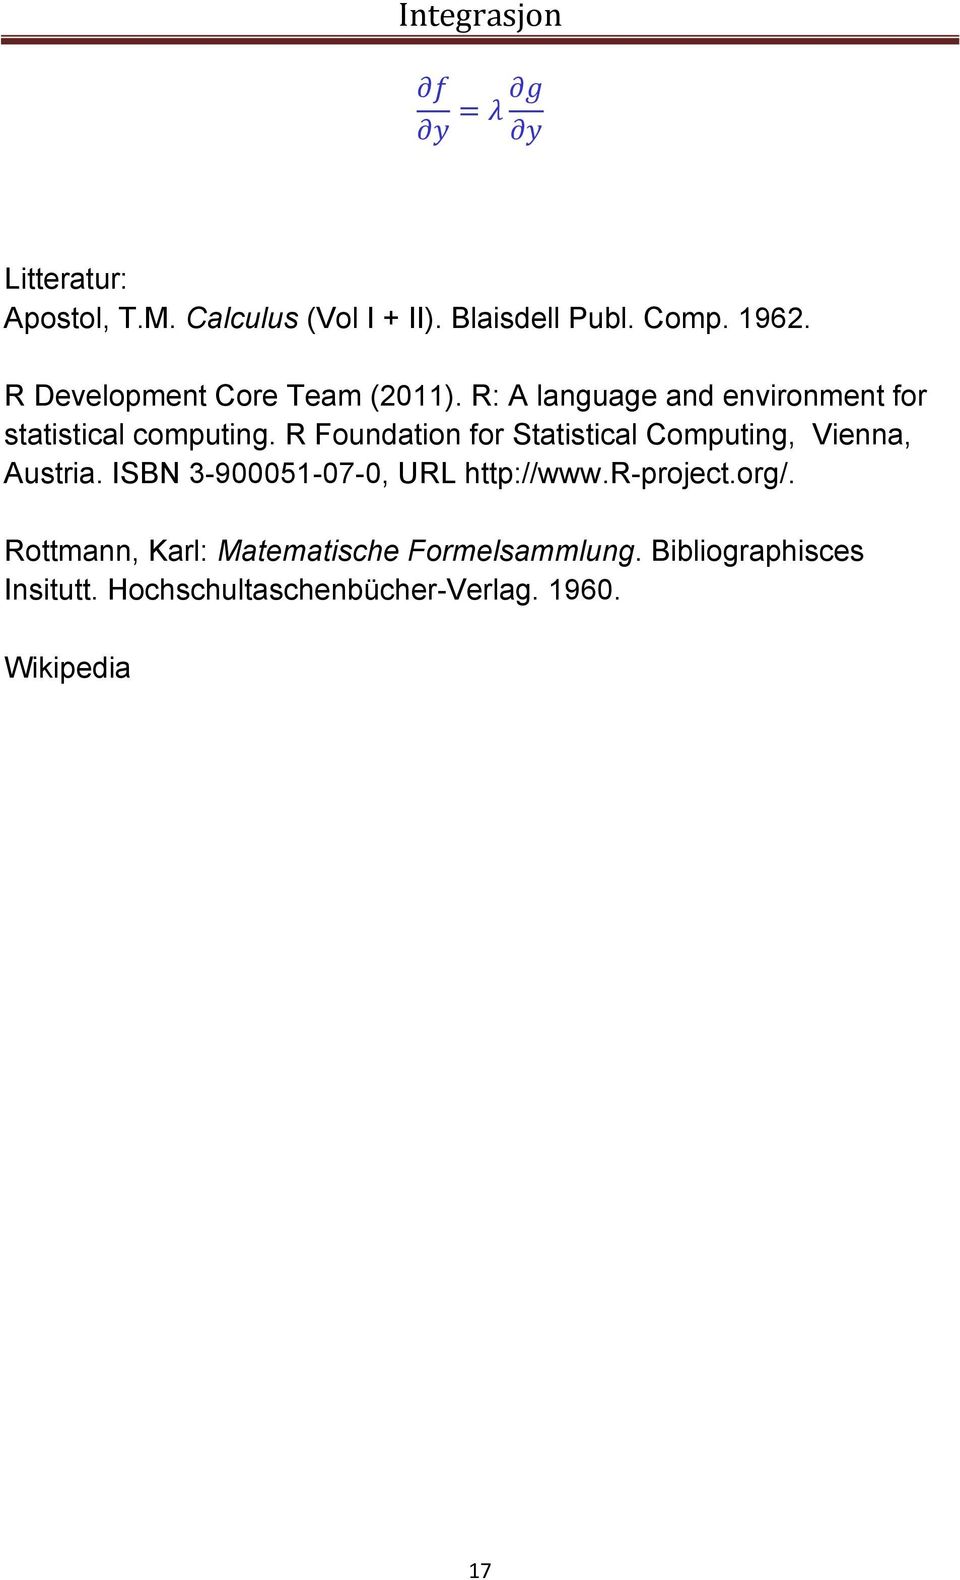 R Foundation for Statistical Computing, Vienna, Austria. ISBN 3-900051-07-0, URL http://www.